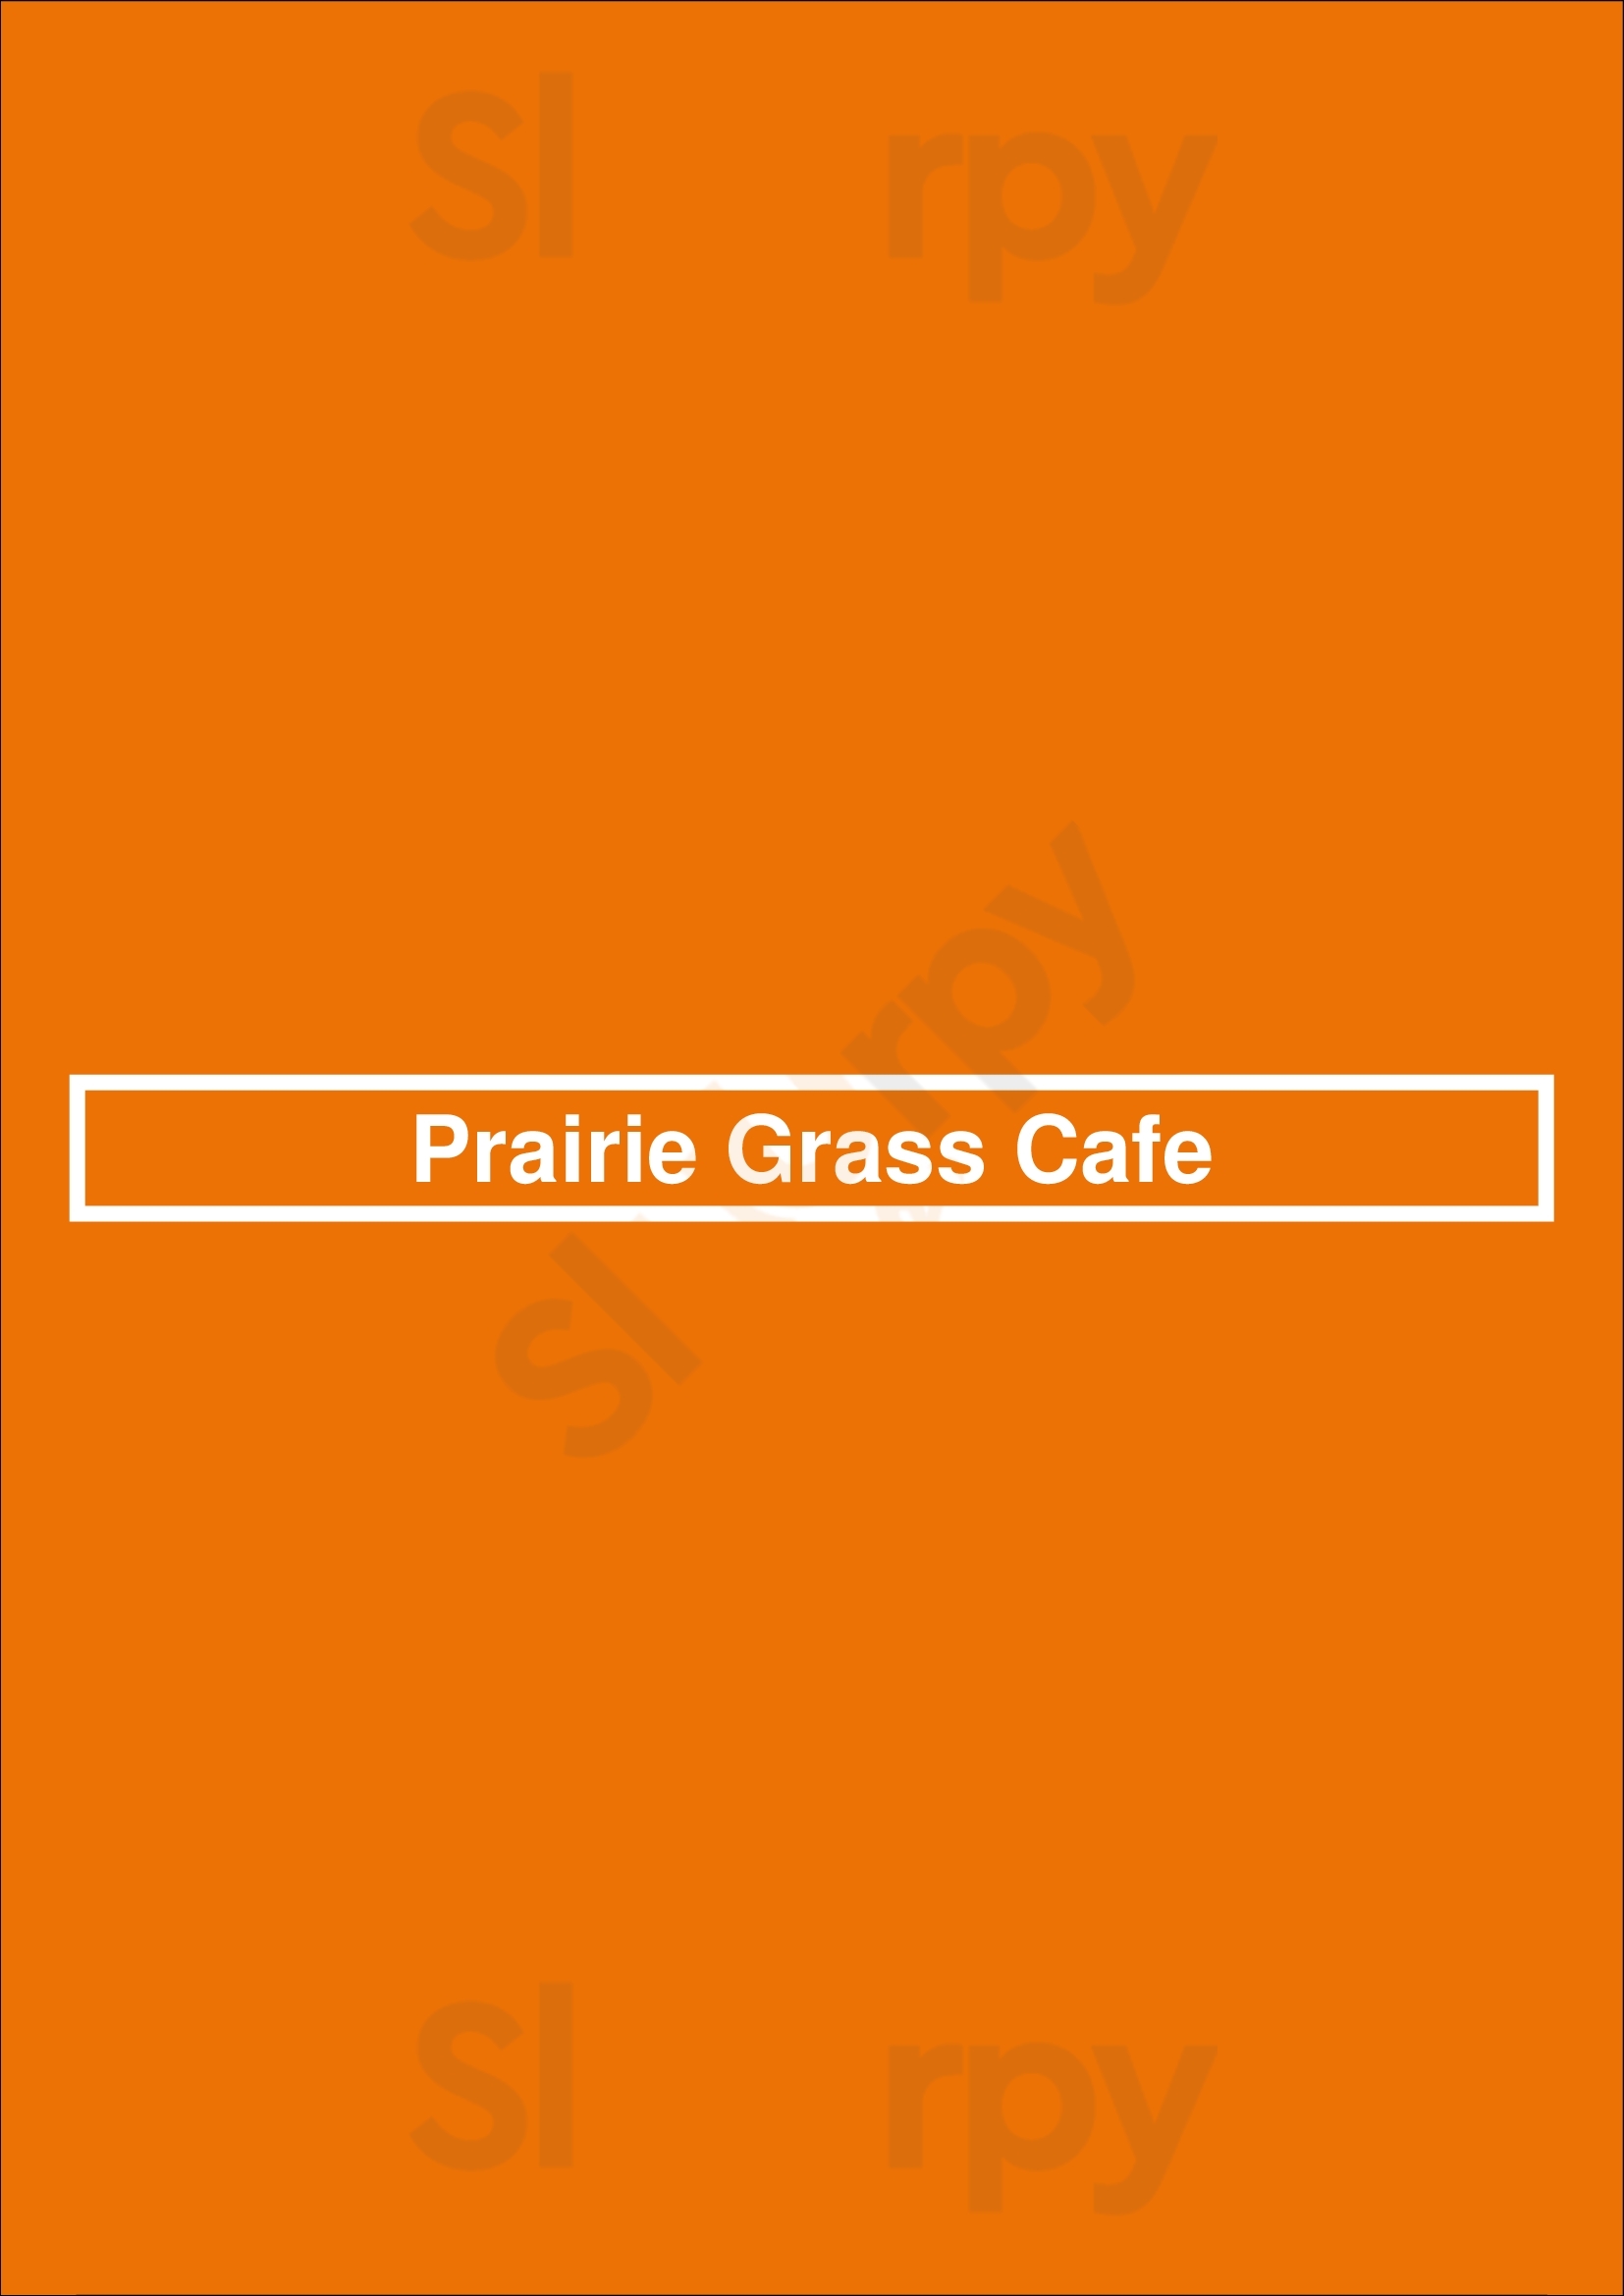 Prairie Grass Cafe Northbrook Menu - 1